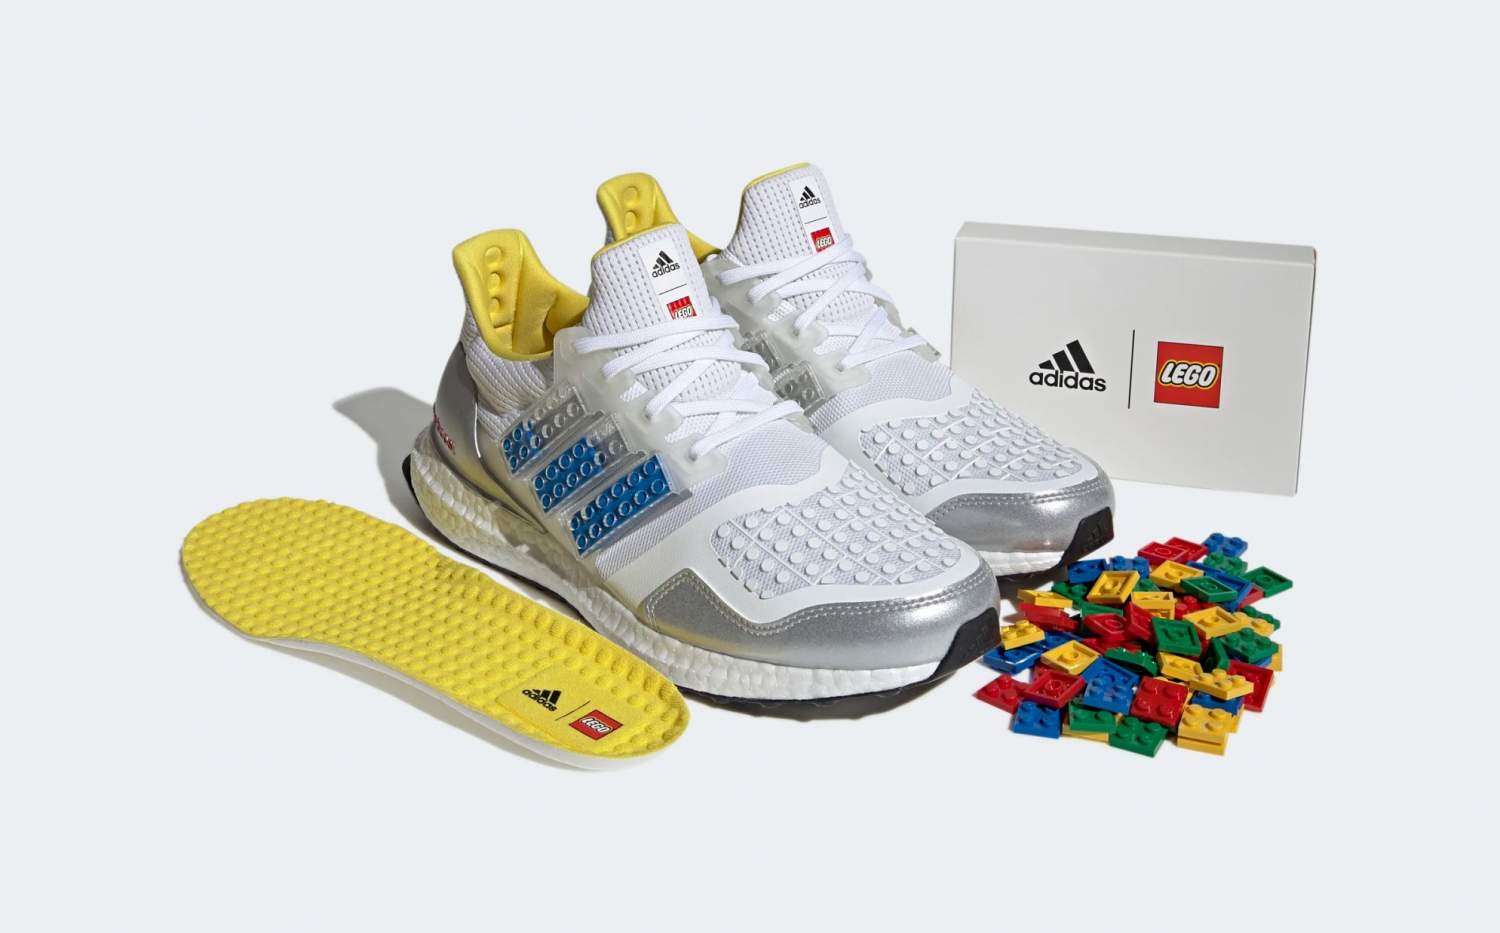 New Adidas Ultraboost Dna Shoes Add Lego Flair To Your Run Slashgear